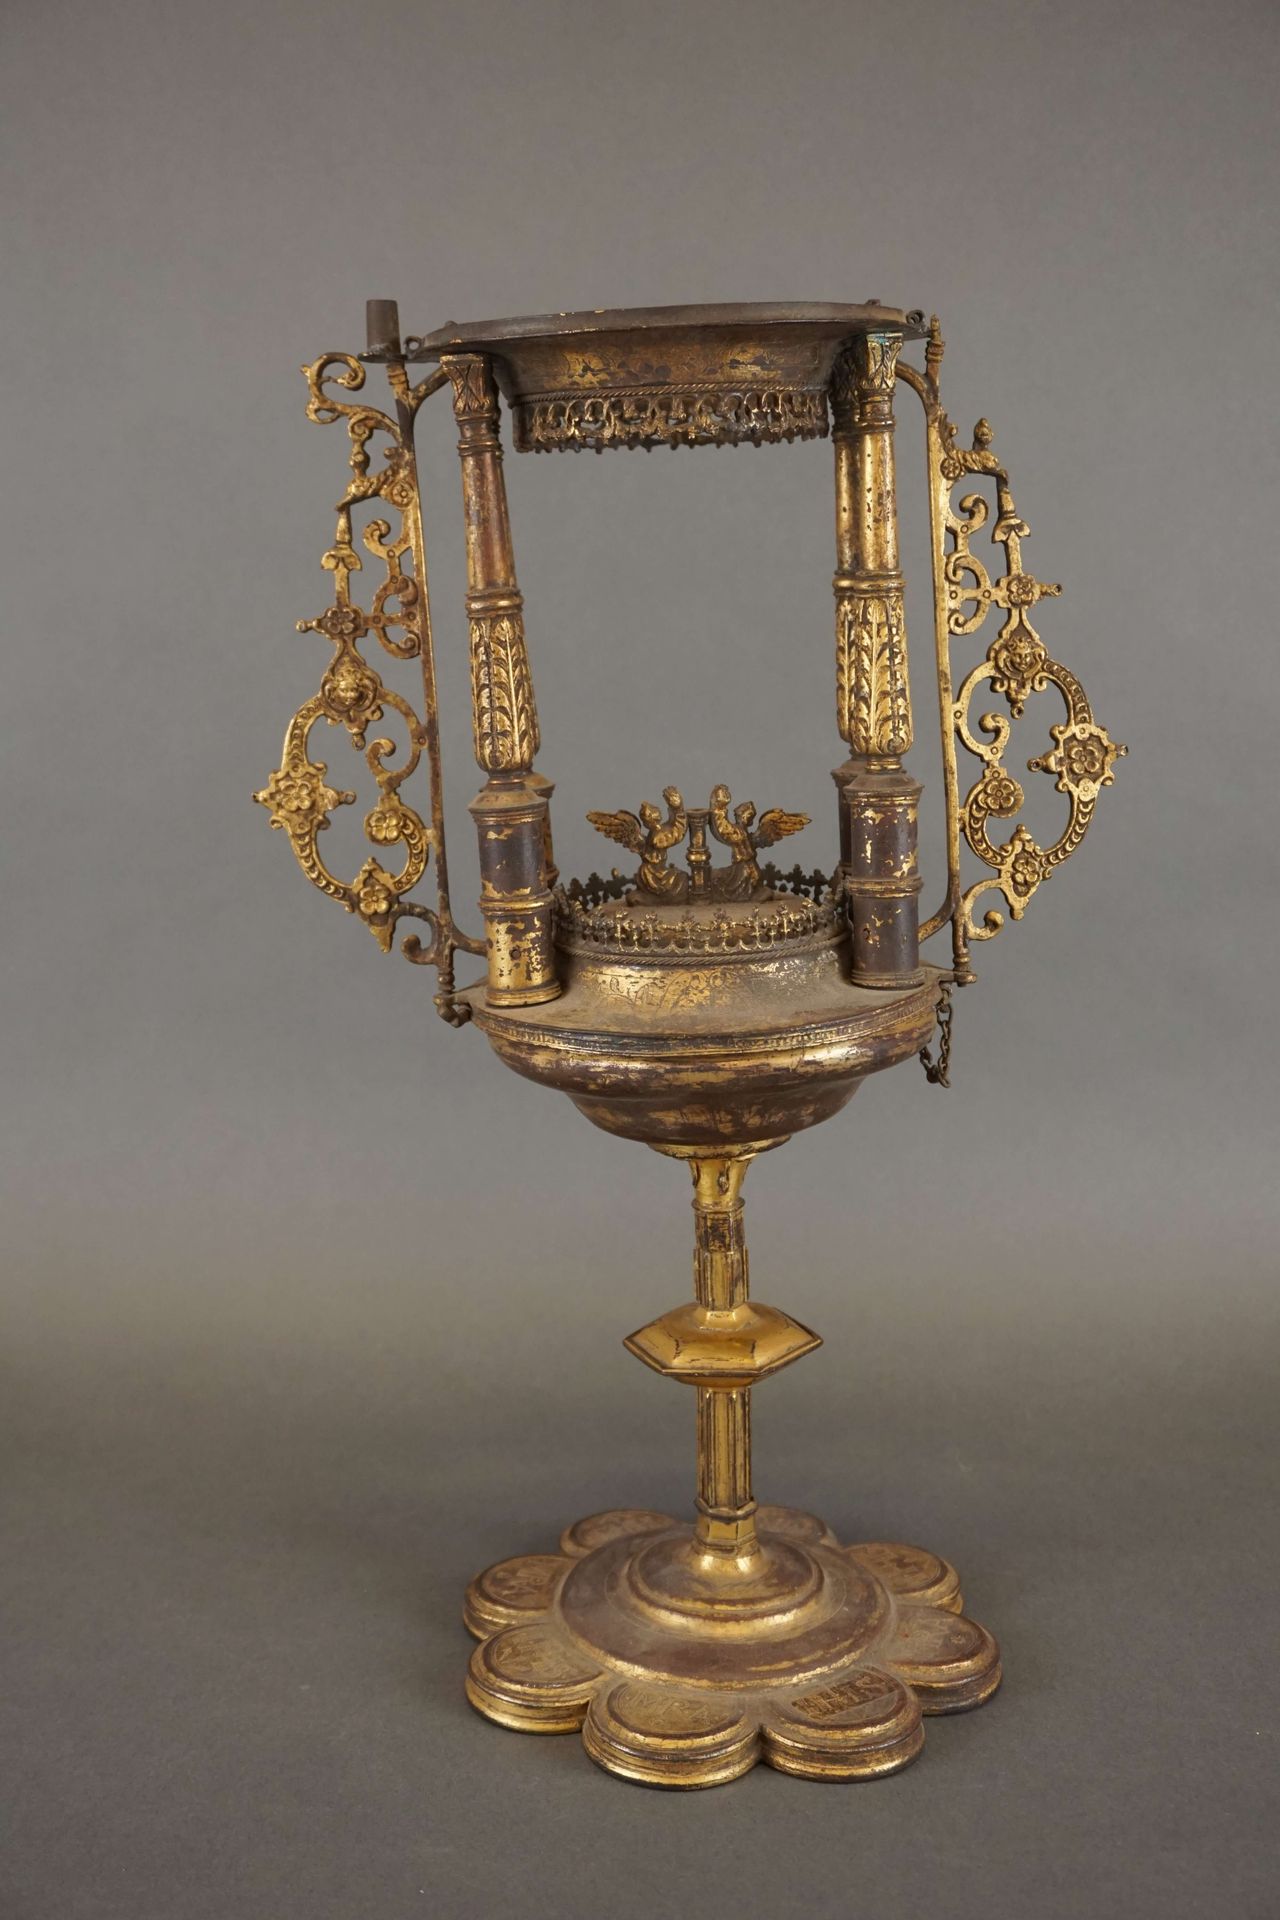 Null Custodia de latón dorado. Incompleto. Siglo XVI. Altura : 40 cm